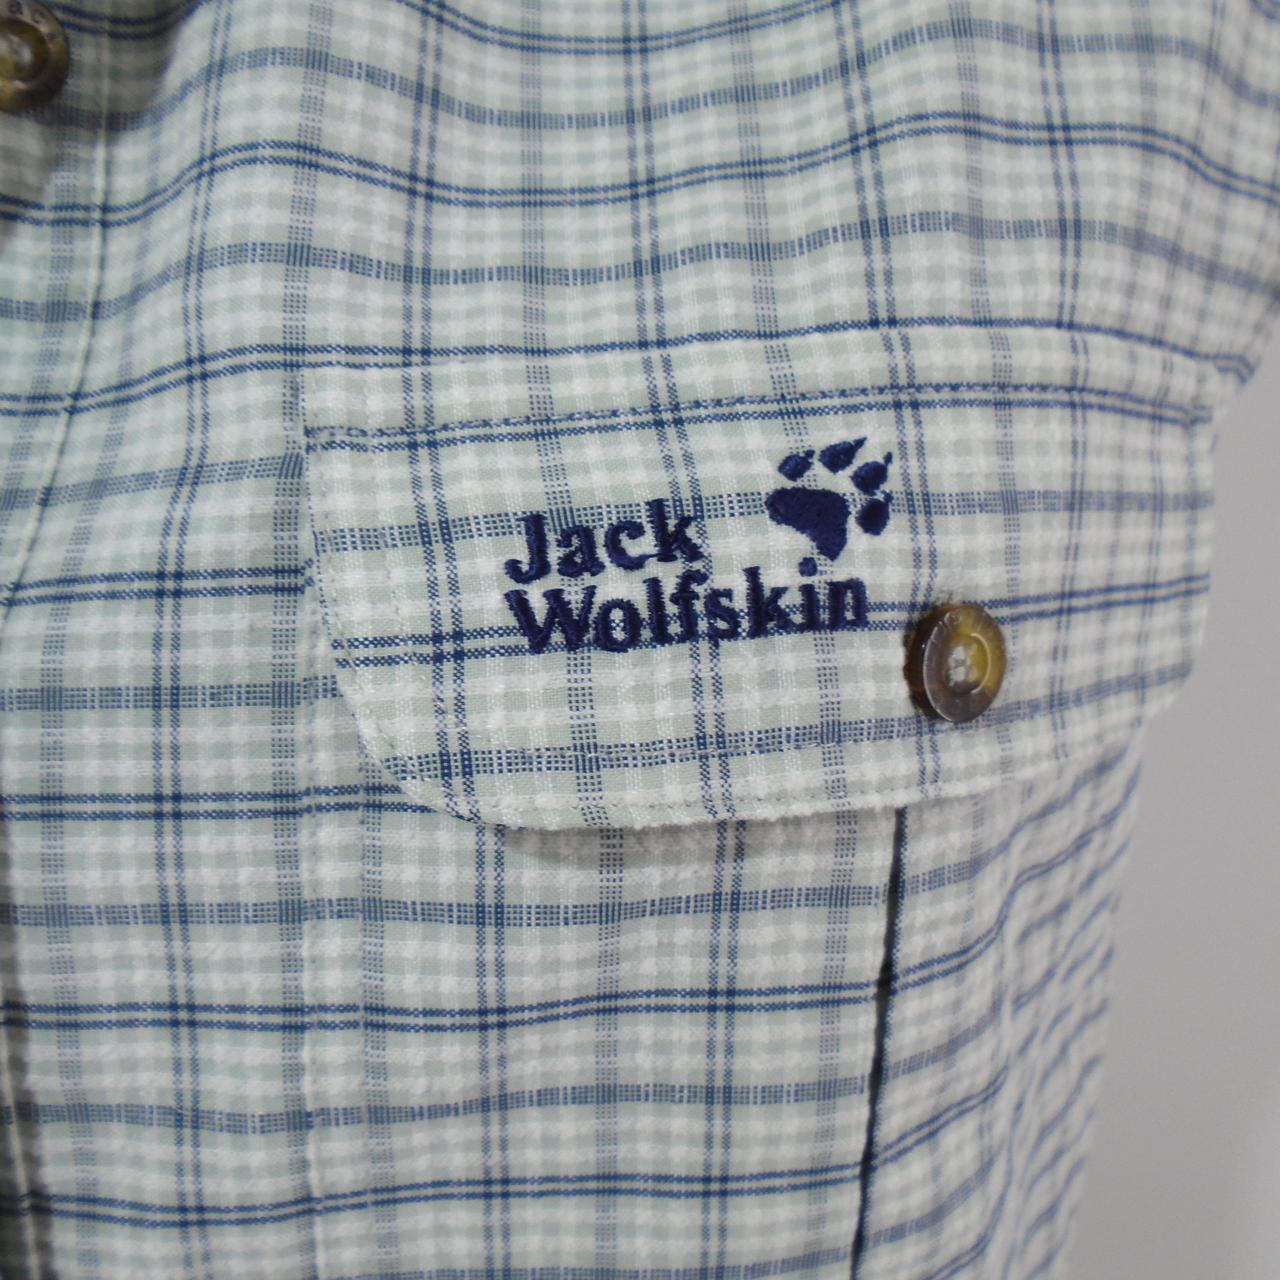 Women's Blouse Jack Wolfskin. Multicolor. L. Used. Good